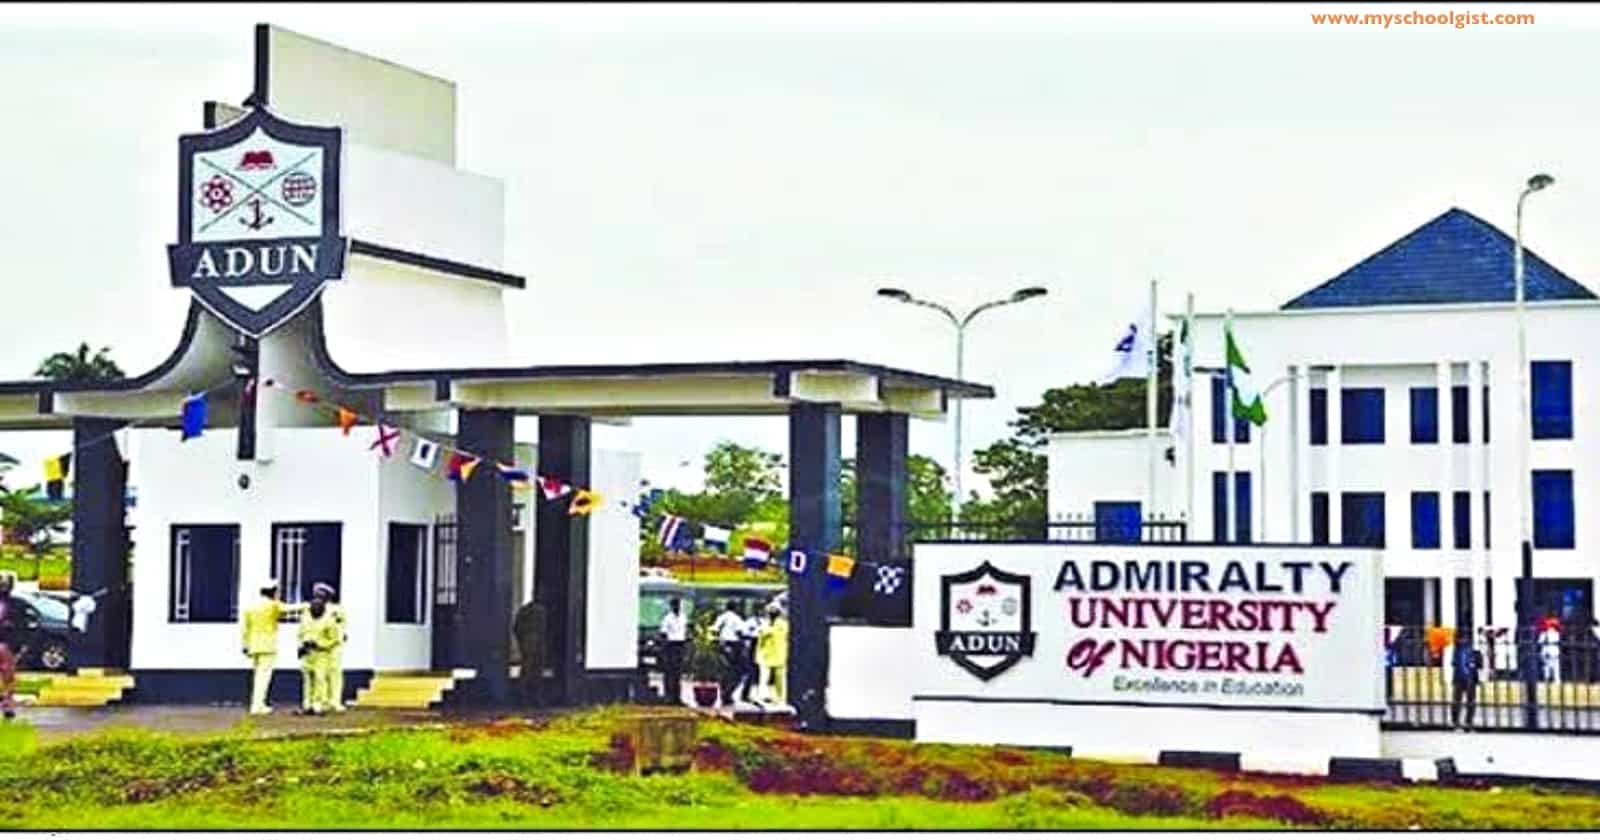 Admiralty University of Nigeria (ADUN) Post UTME Screening Form